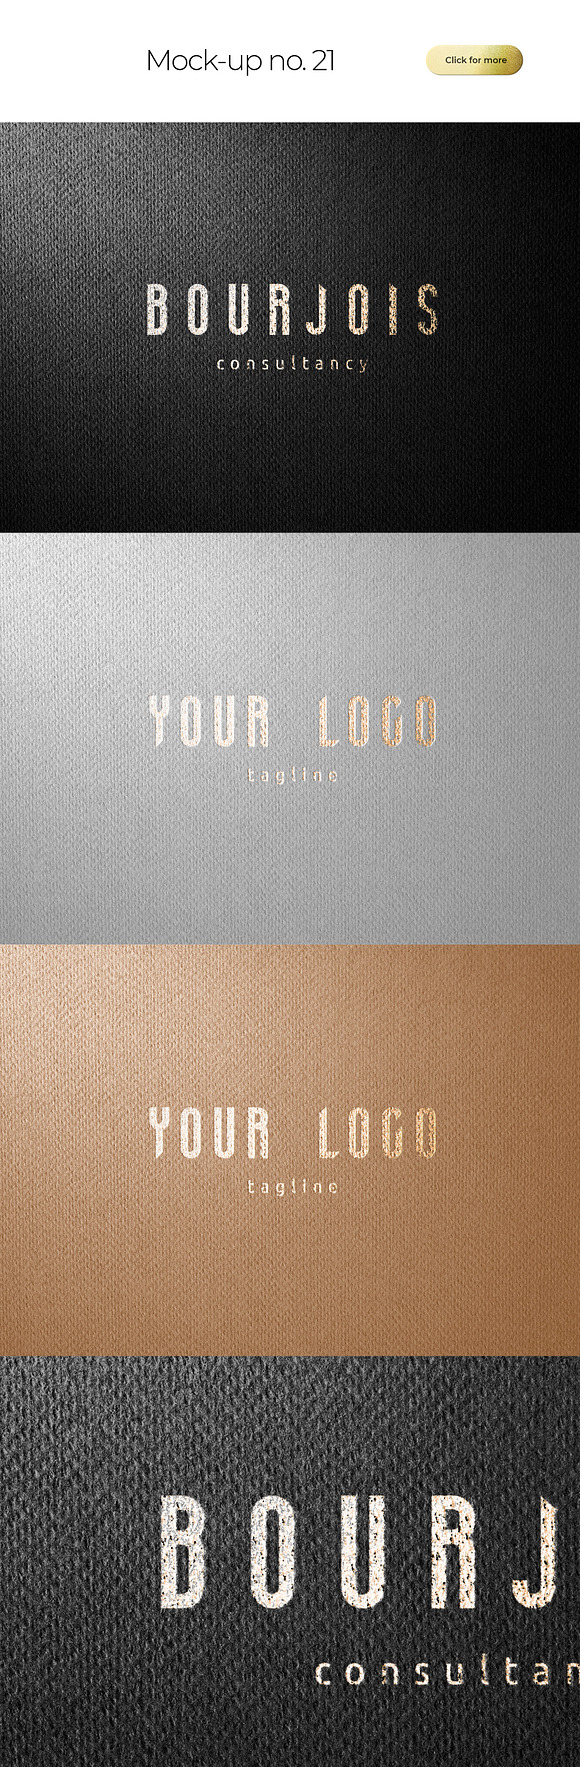 50 logo mockup branding bundle in Branding Mockups - product preview 22